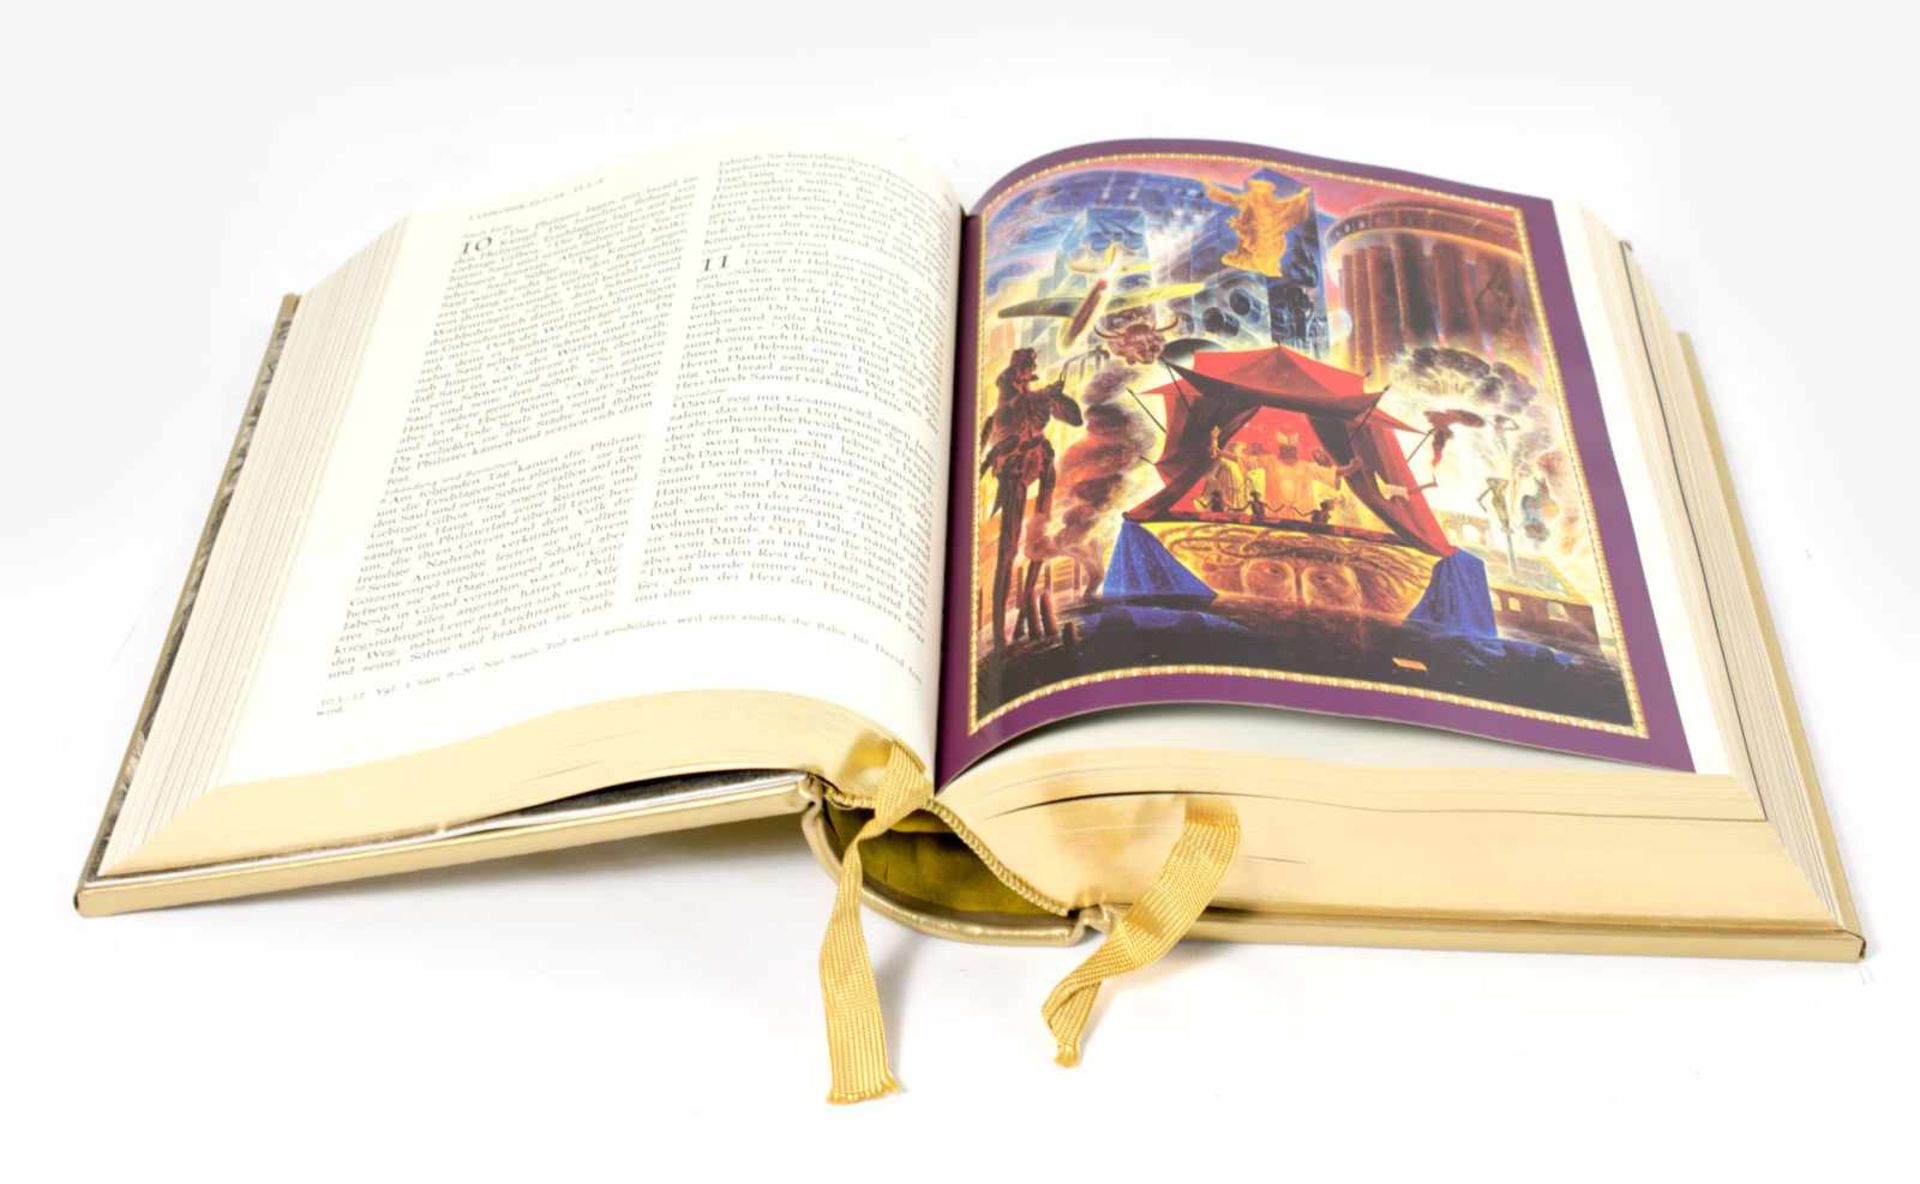 Die Goldene Bibel Ernst Fuchs (1915 Wien - 2015 ebenda), 1996, Exemplar 11539/20000 nummeriert, im - Image 2 of 2